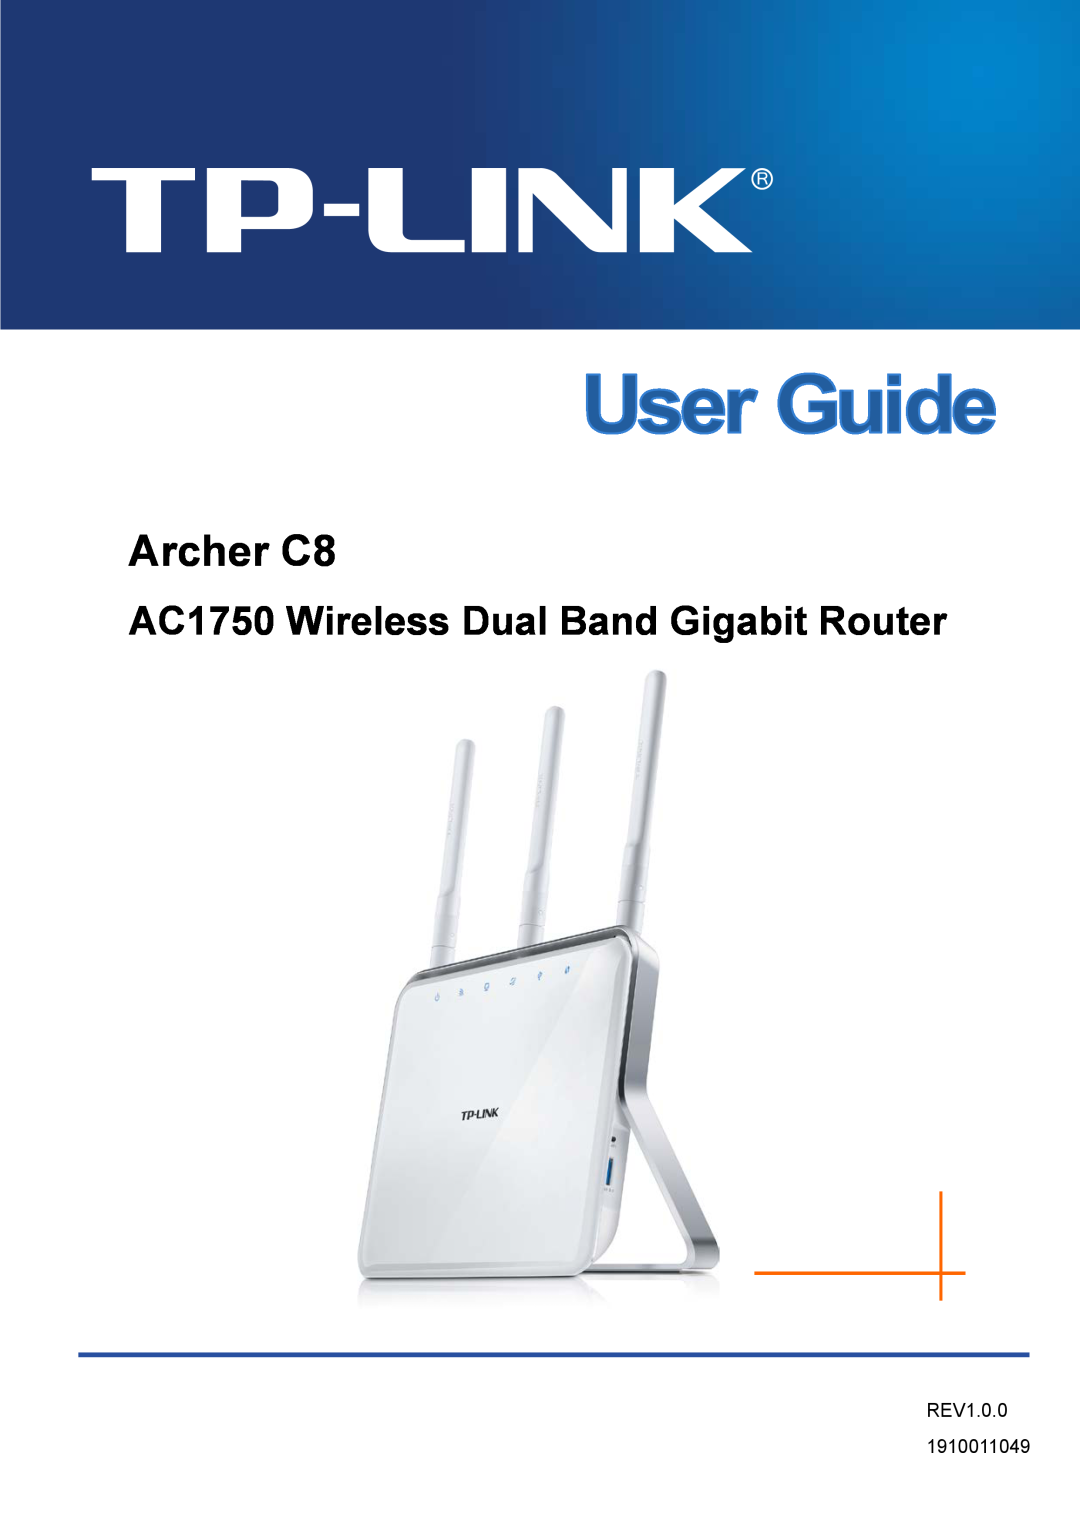 TP-Link manual AC1750 Wireless Dual Band Gigabit Router, Archer C7 